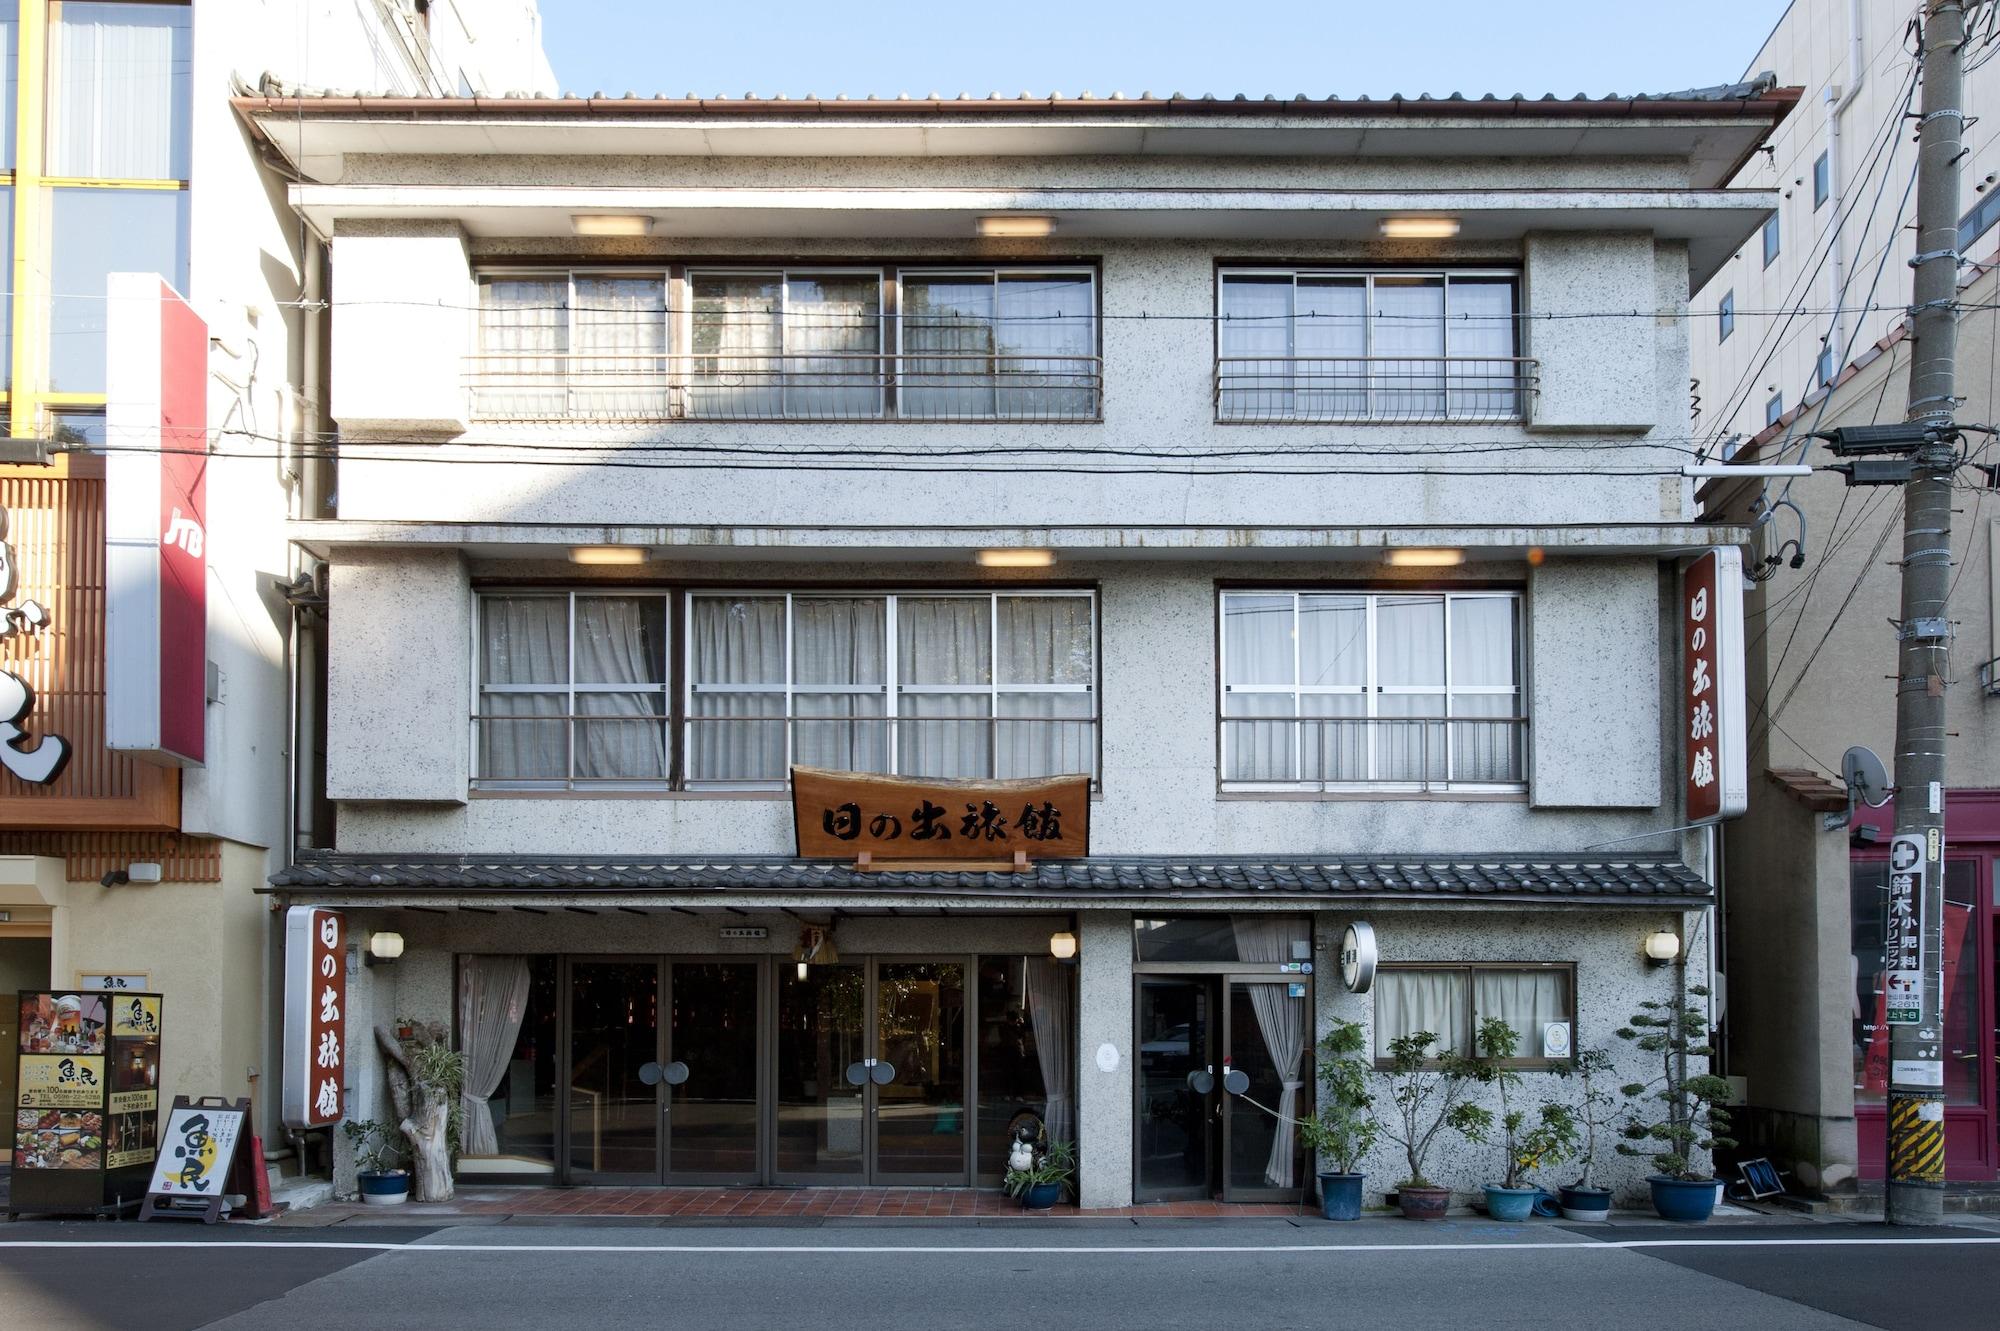 Sunrise Inn, Ise hinode ryokan image